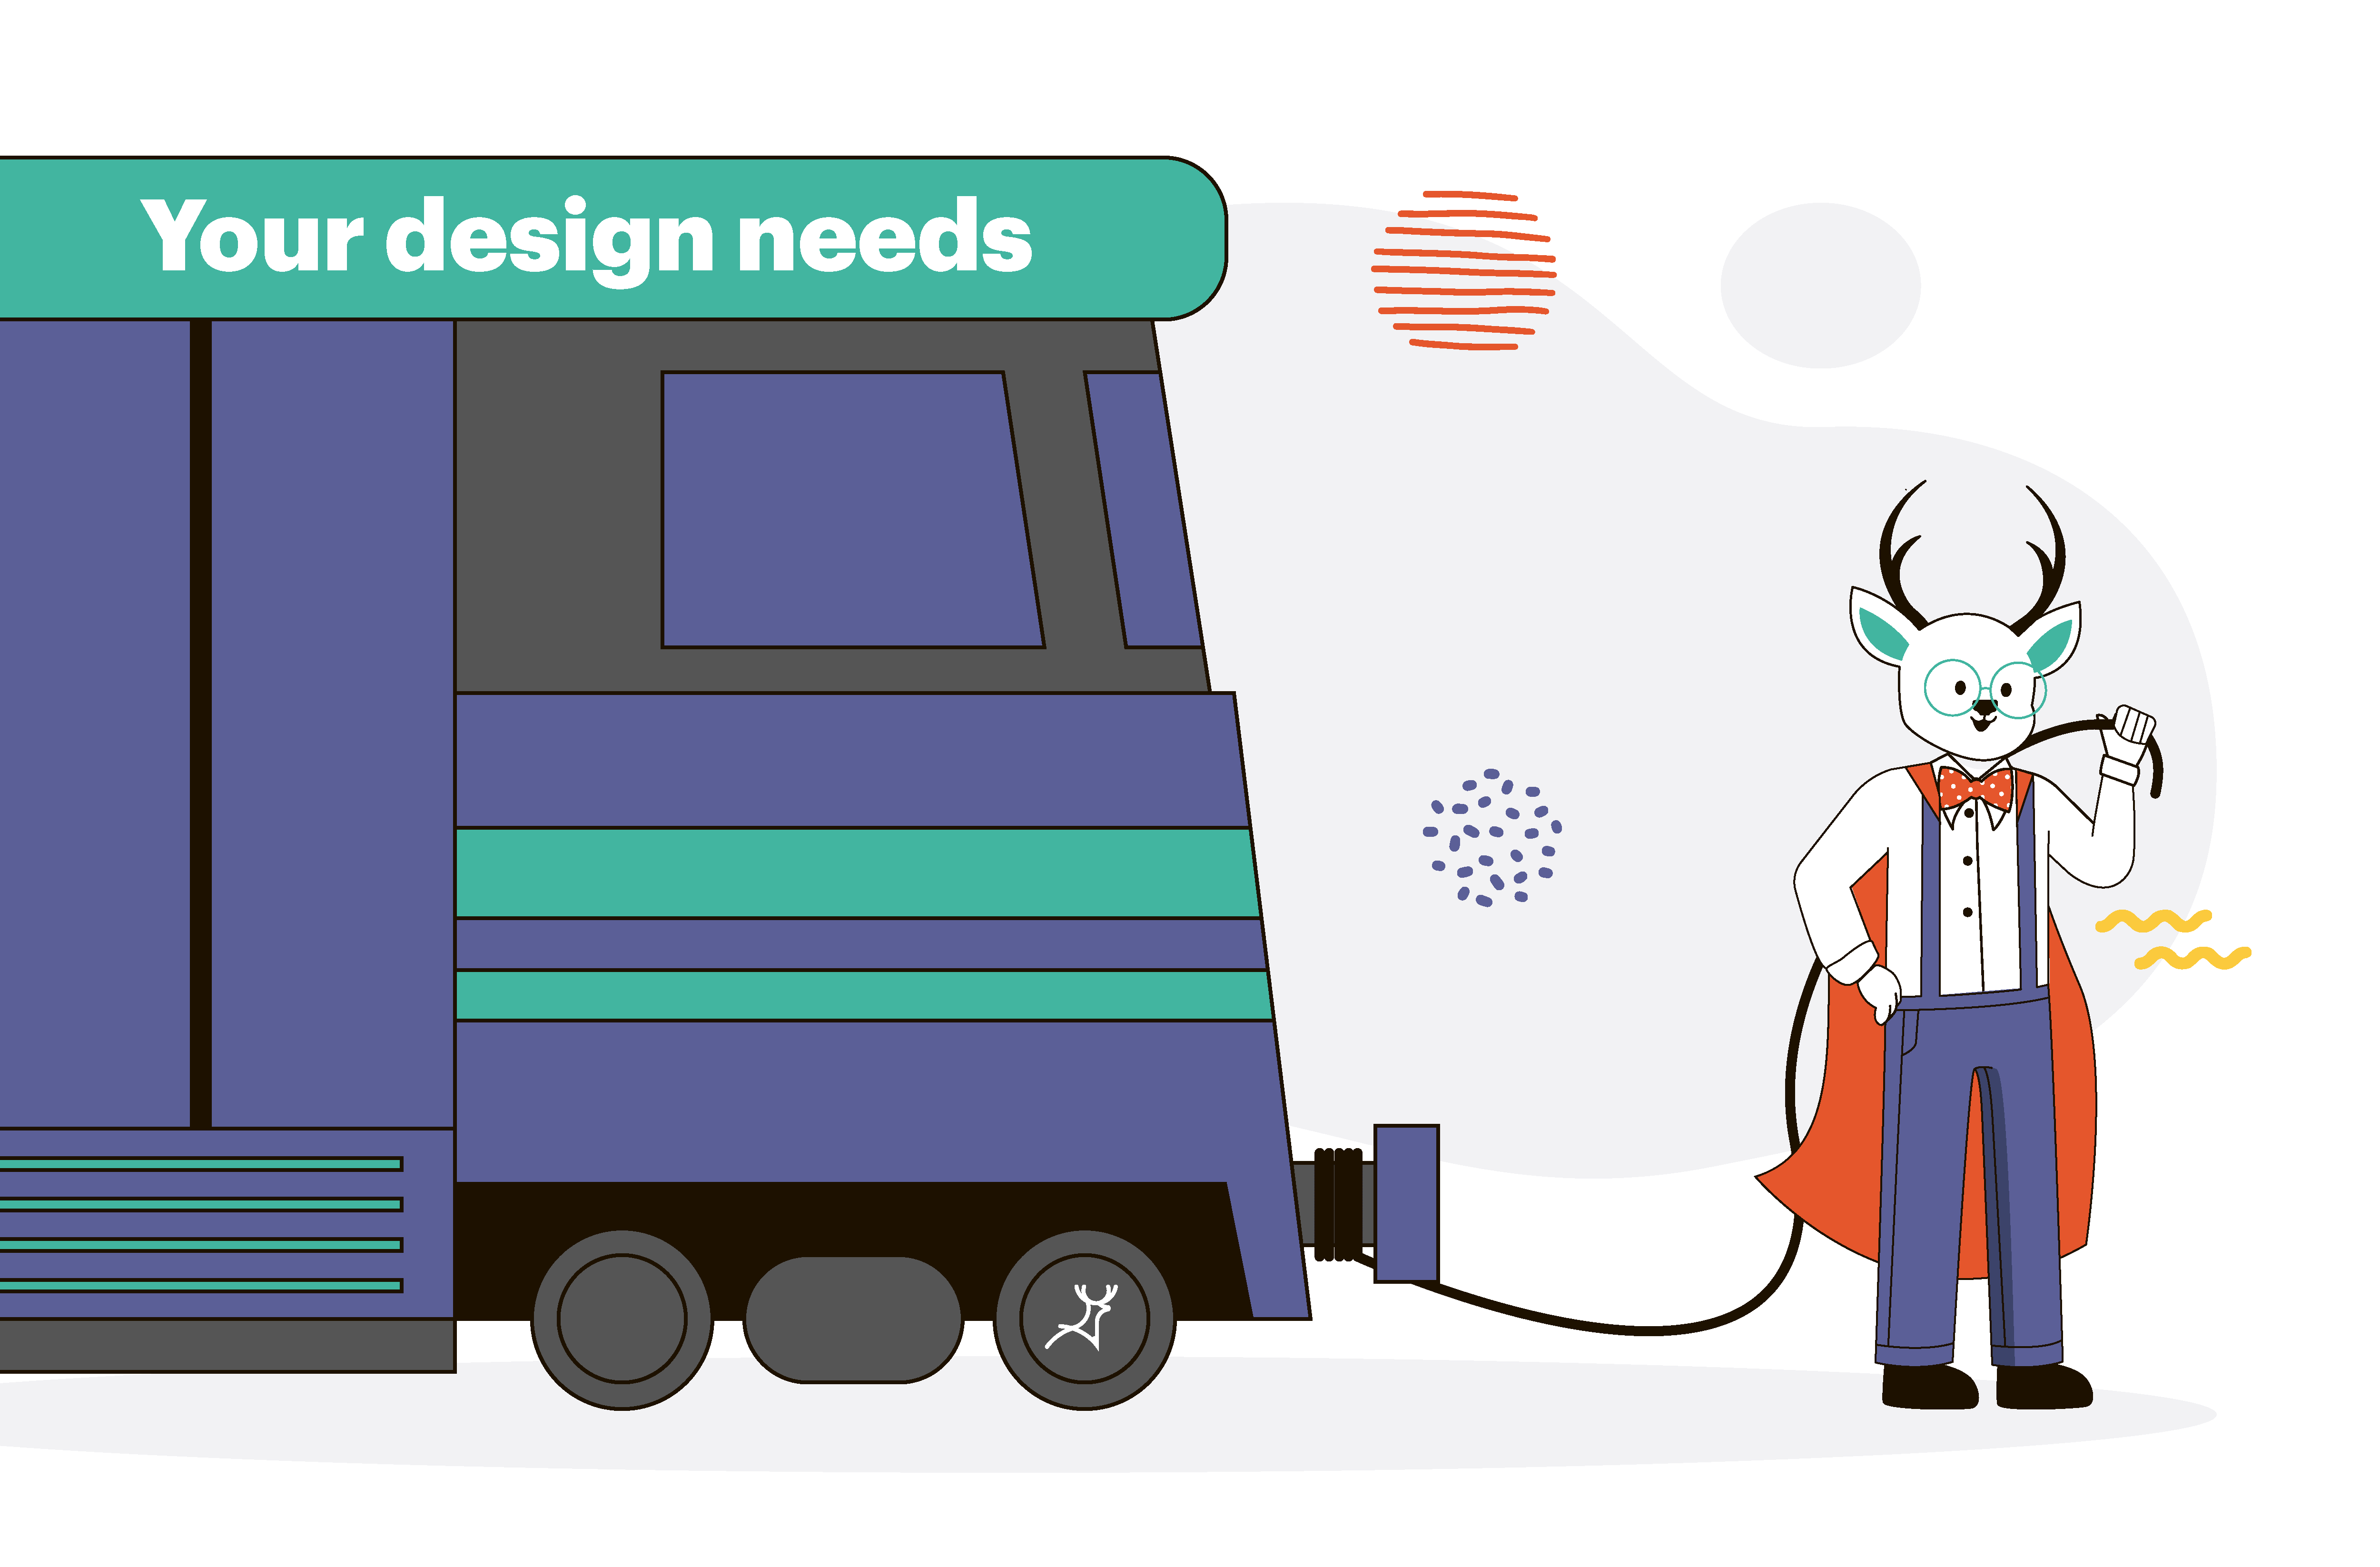 Deer Designer mascot carrying pulling train design needs